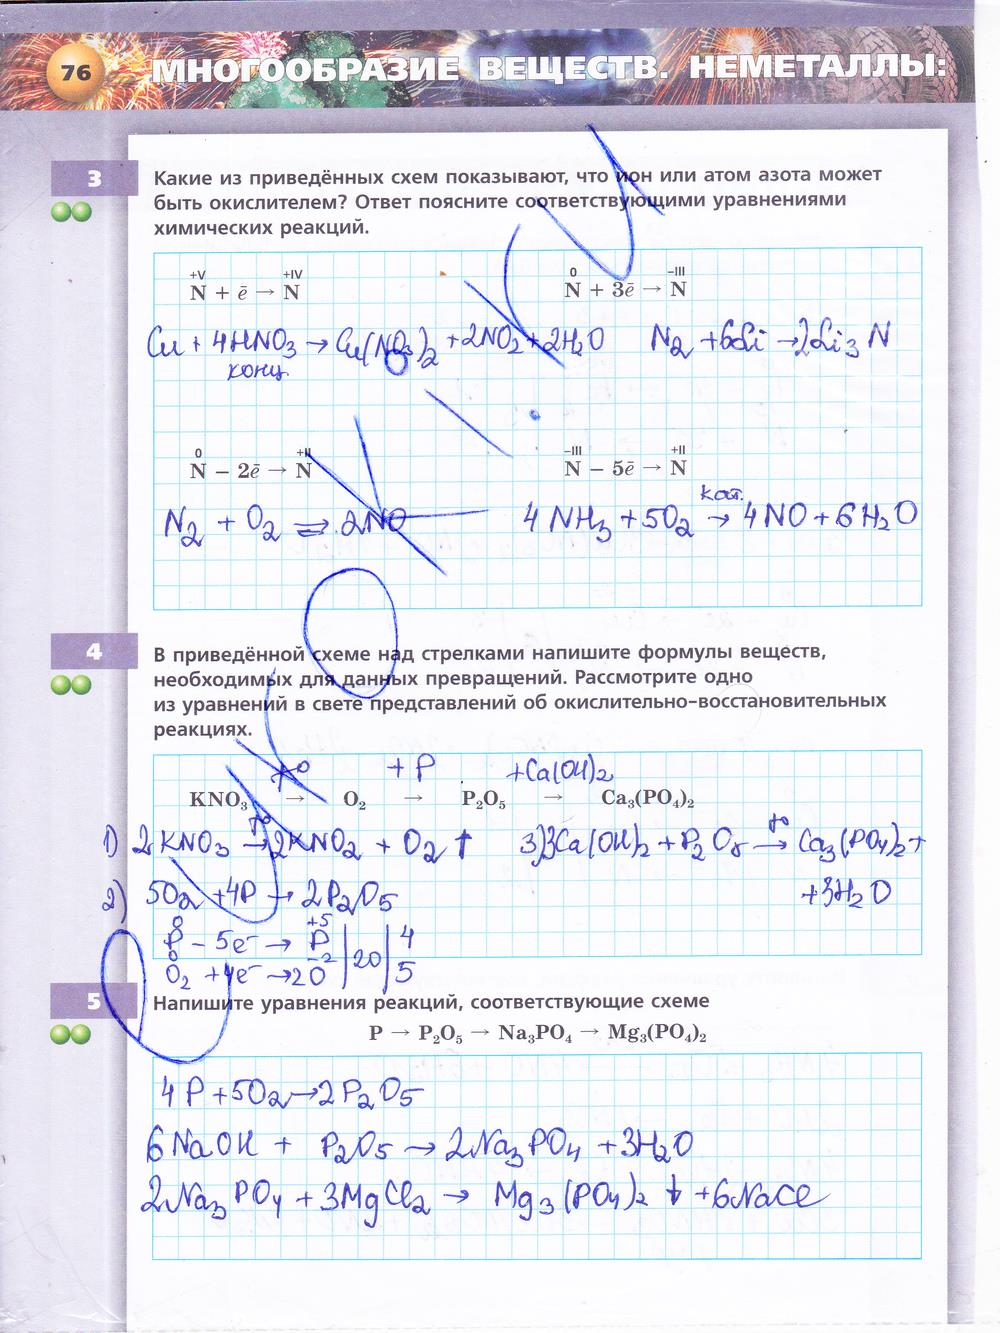 гдз 9 класс тетрадь-тренажёр страница 76 химия Гара